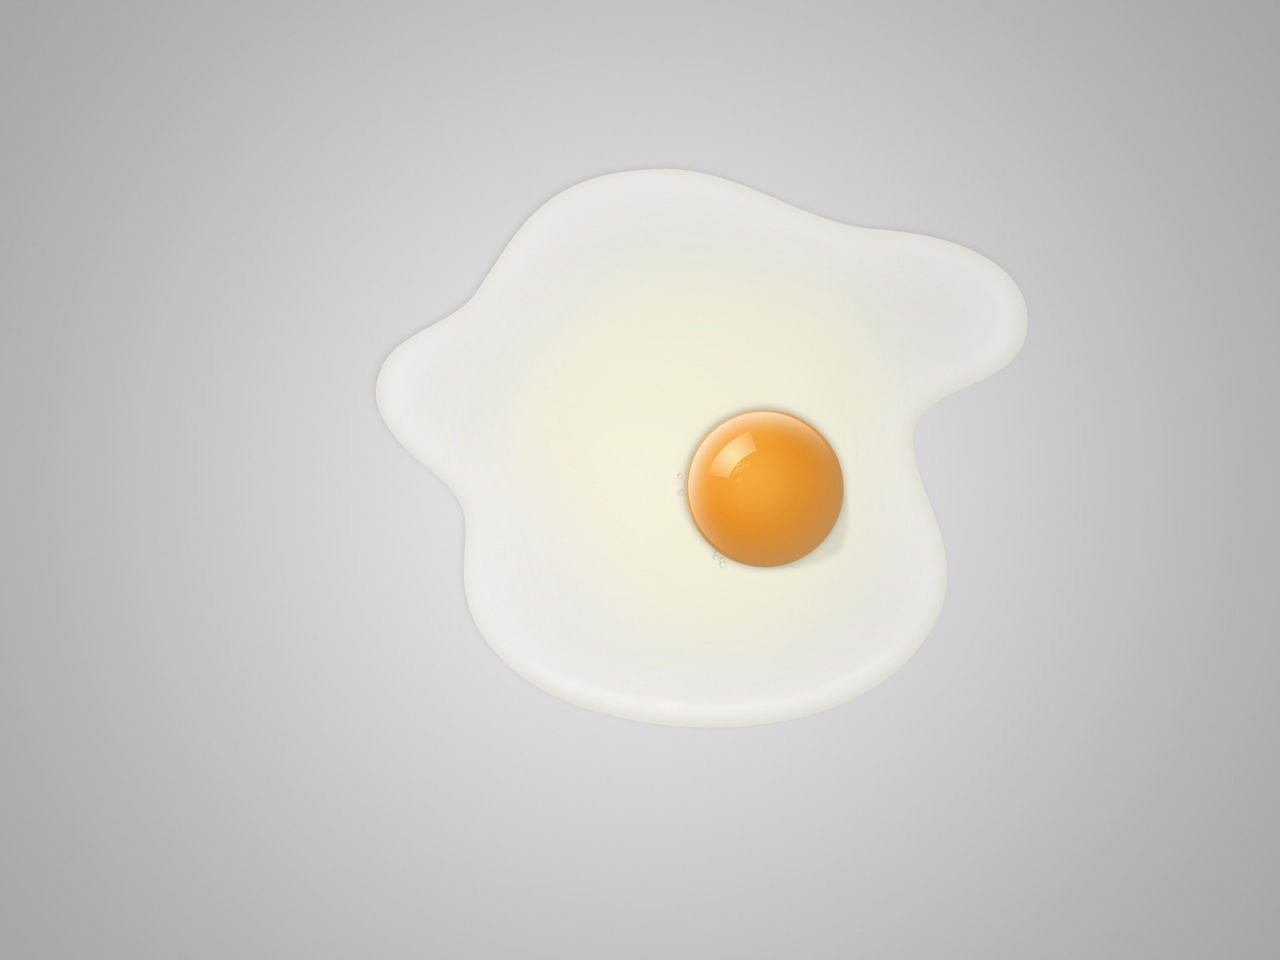 Minimal fried egg for 1280 x 960 resolution